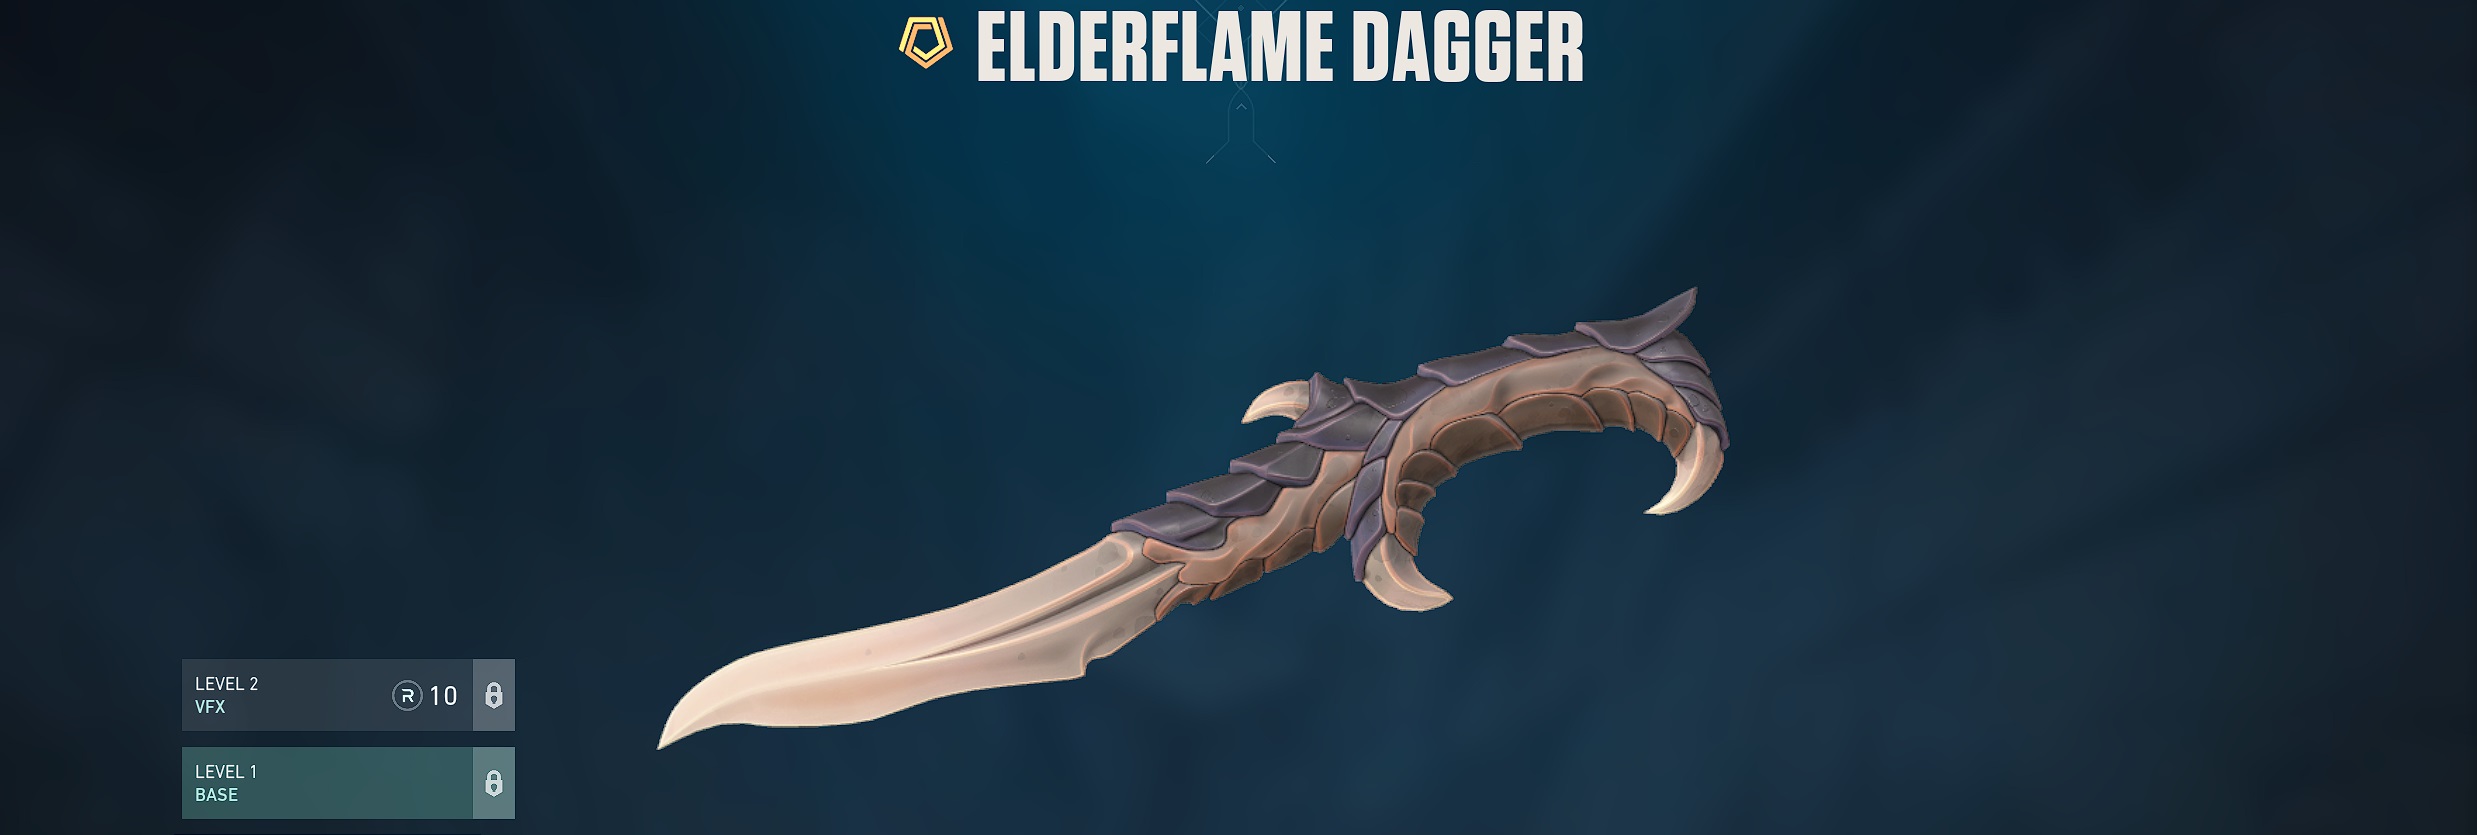 Elderflame Dagger - Screenshot